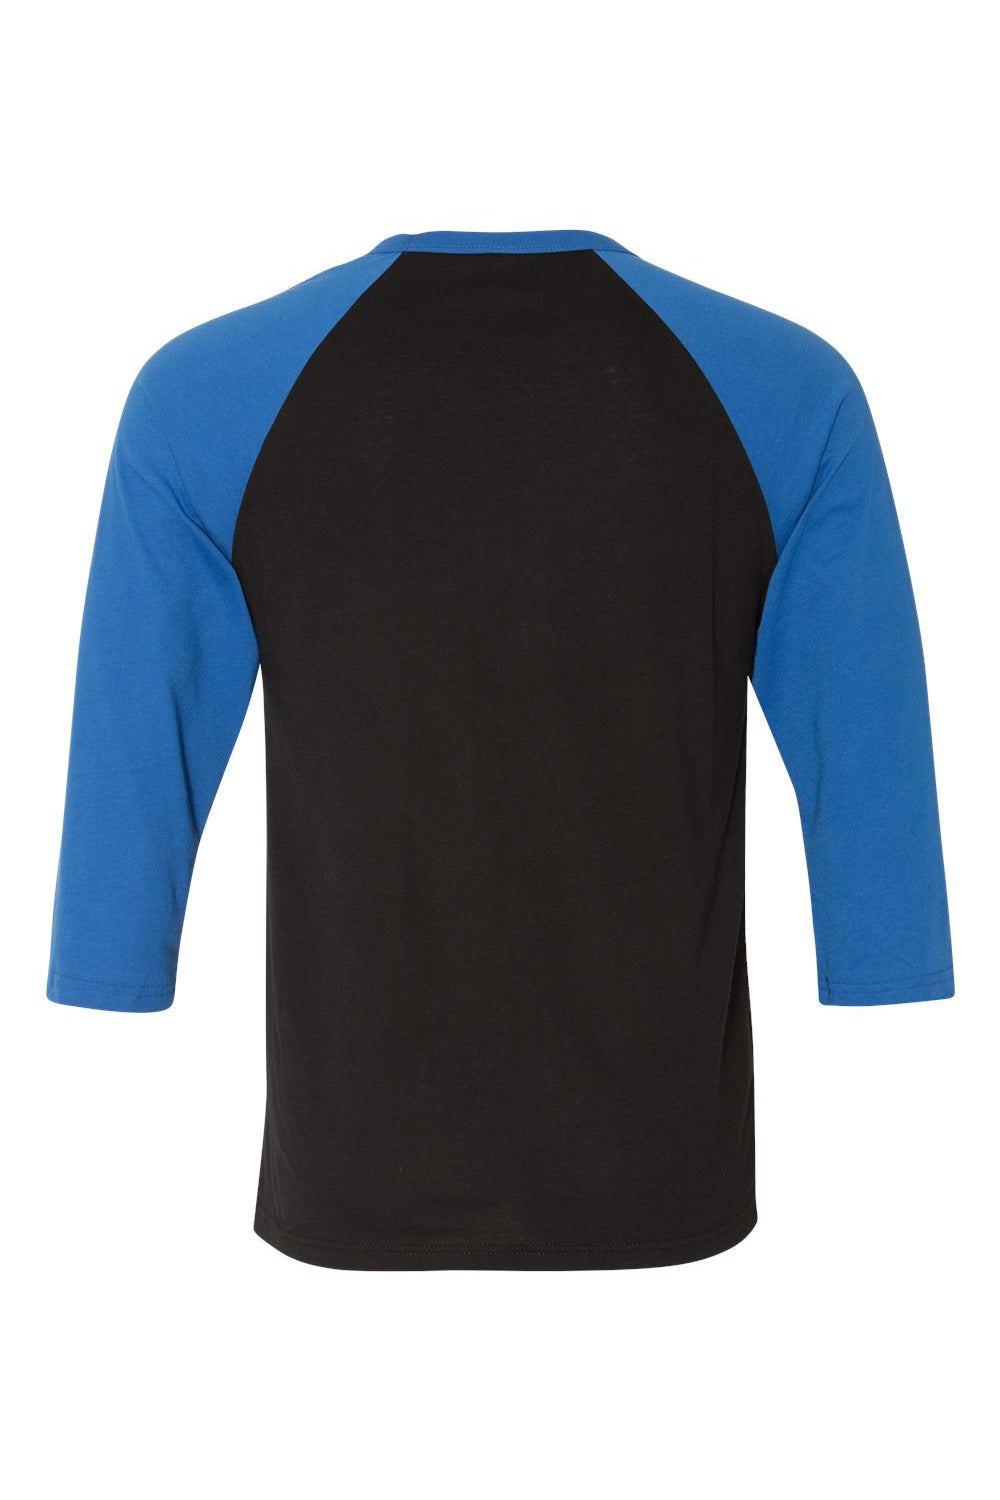 Bella + Canvas BC3200/3200 Mens 3/4 Sleeve Crewneck T-Shirt Black/Royal Blue Flat Back